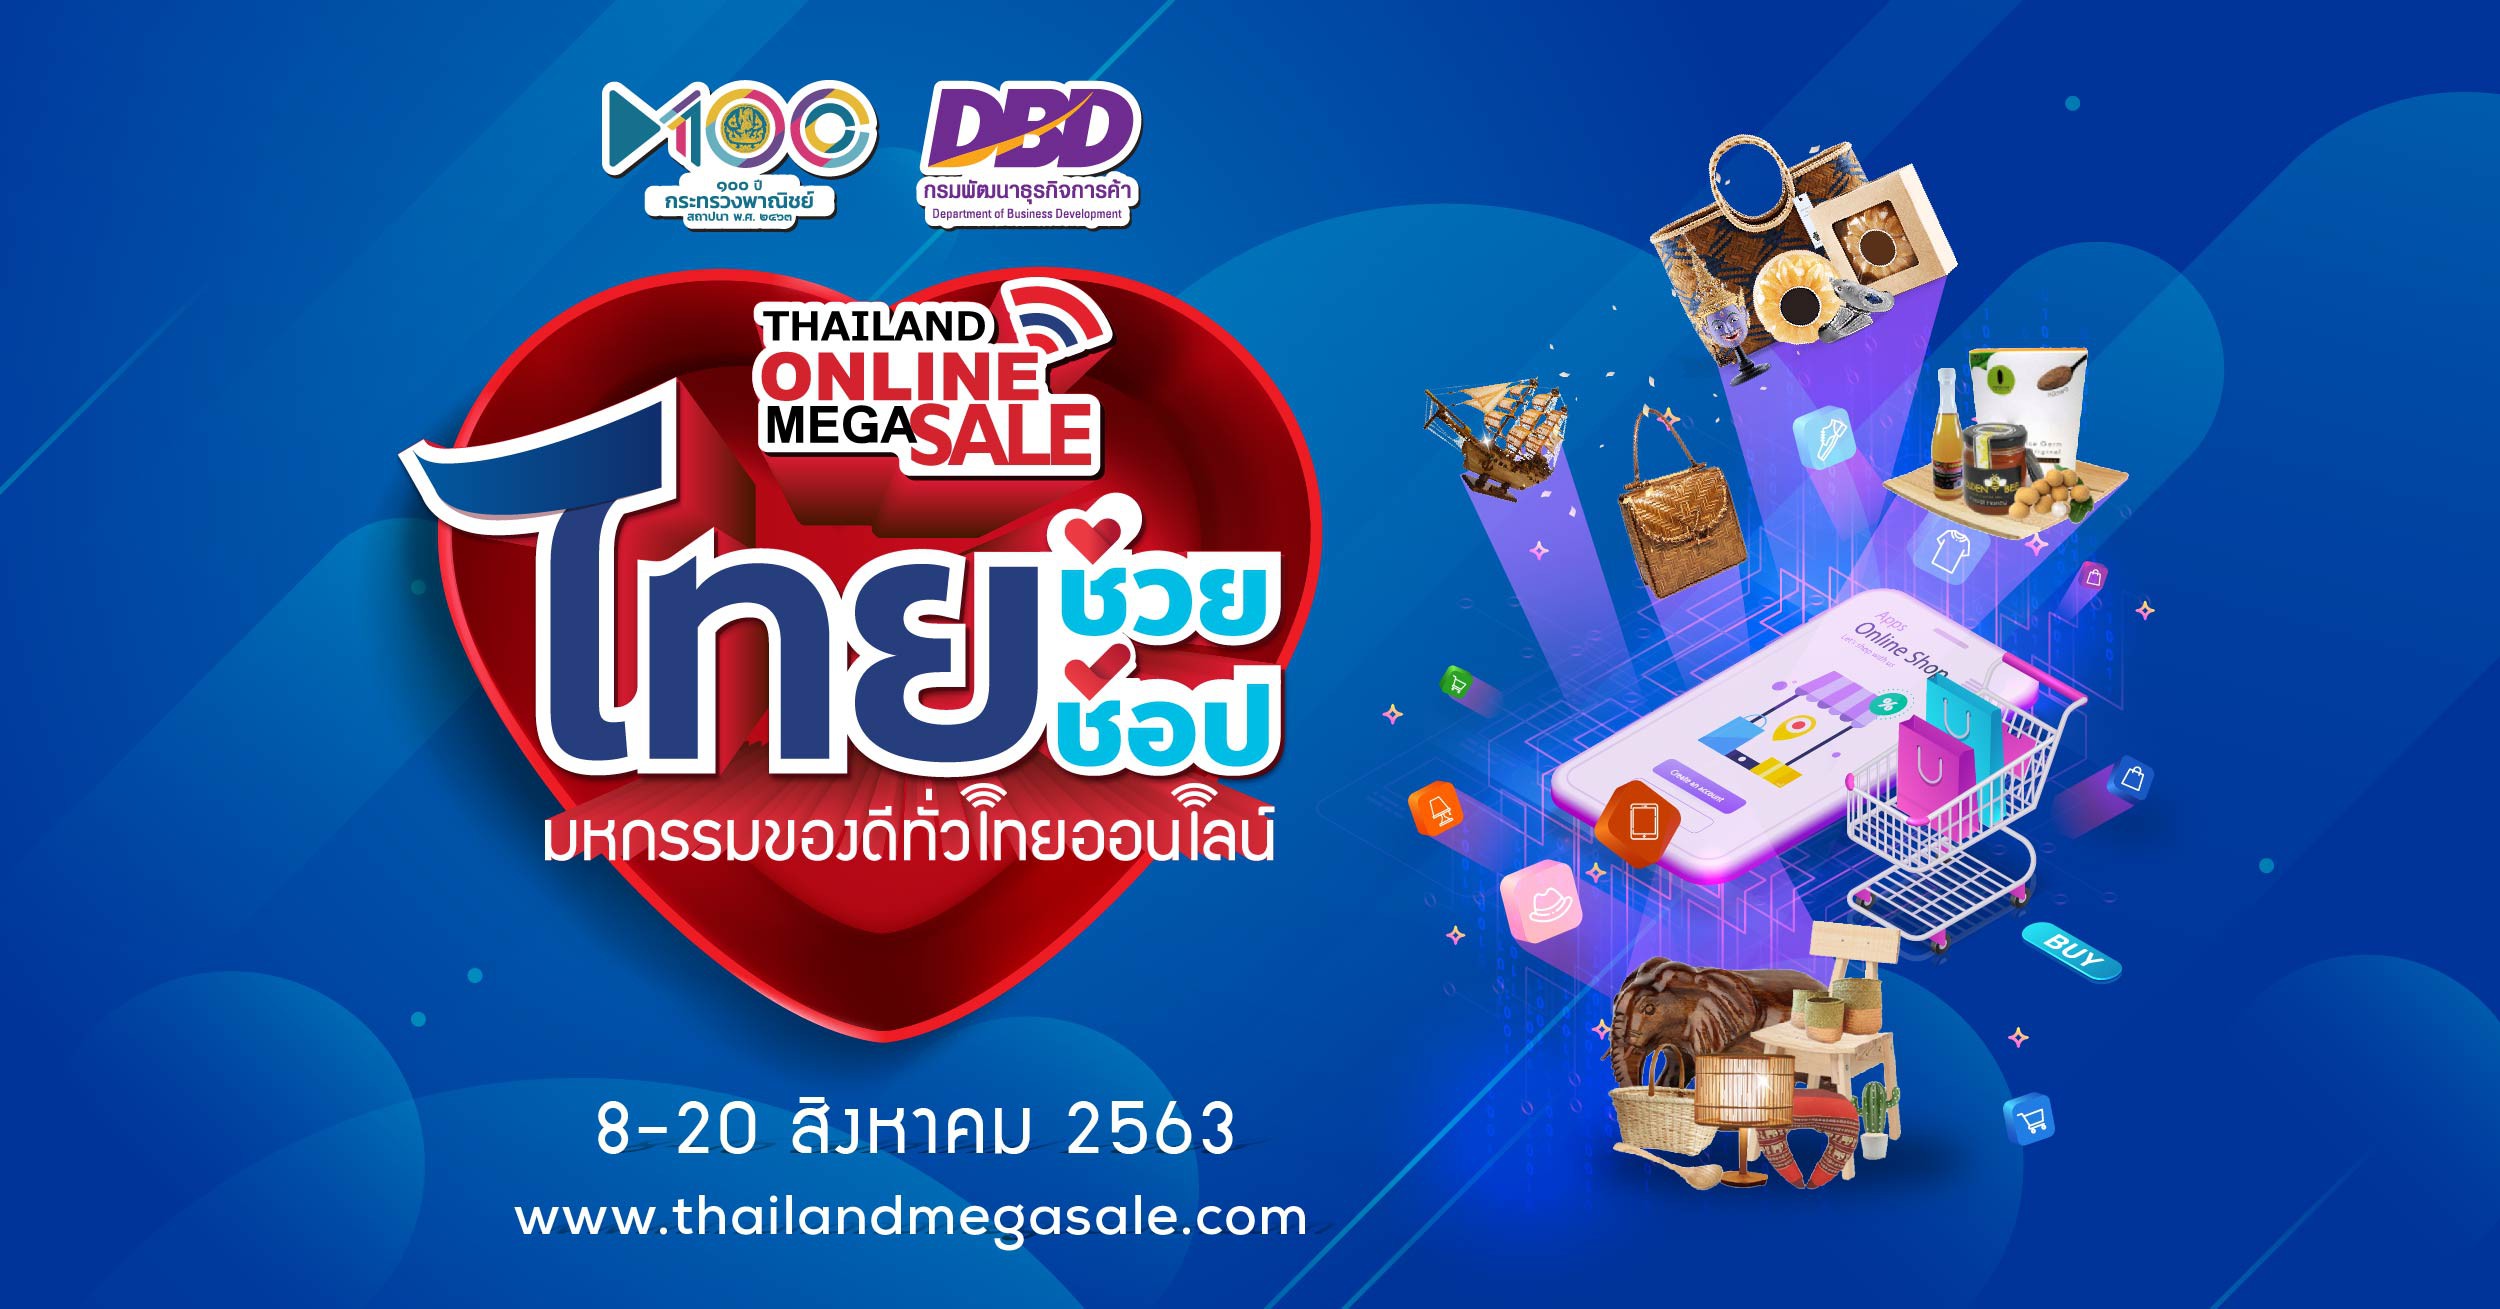 Thailand Online Mega Sale 2020